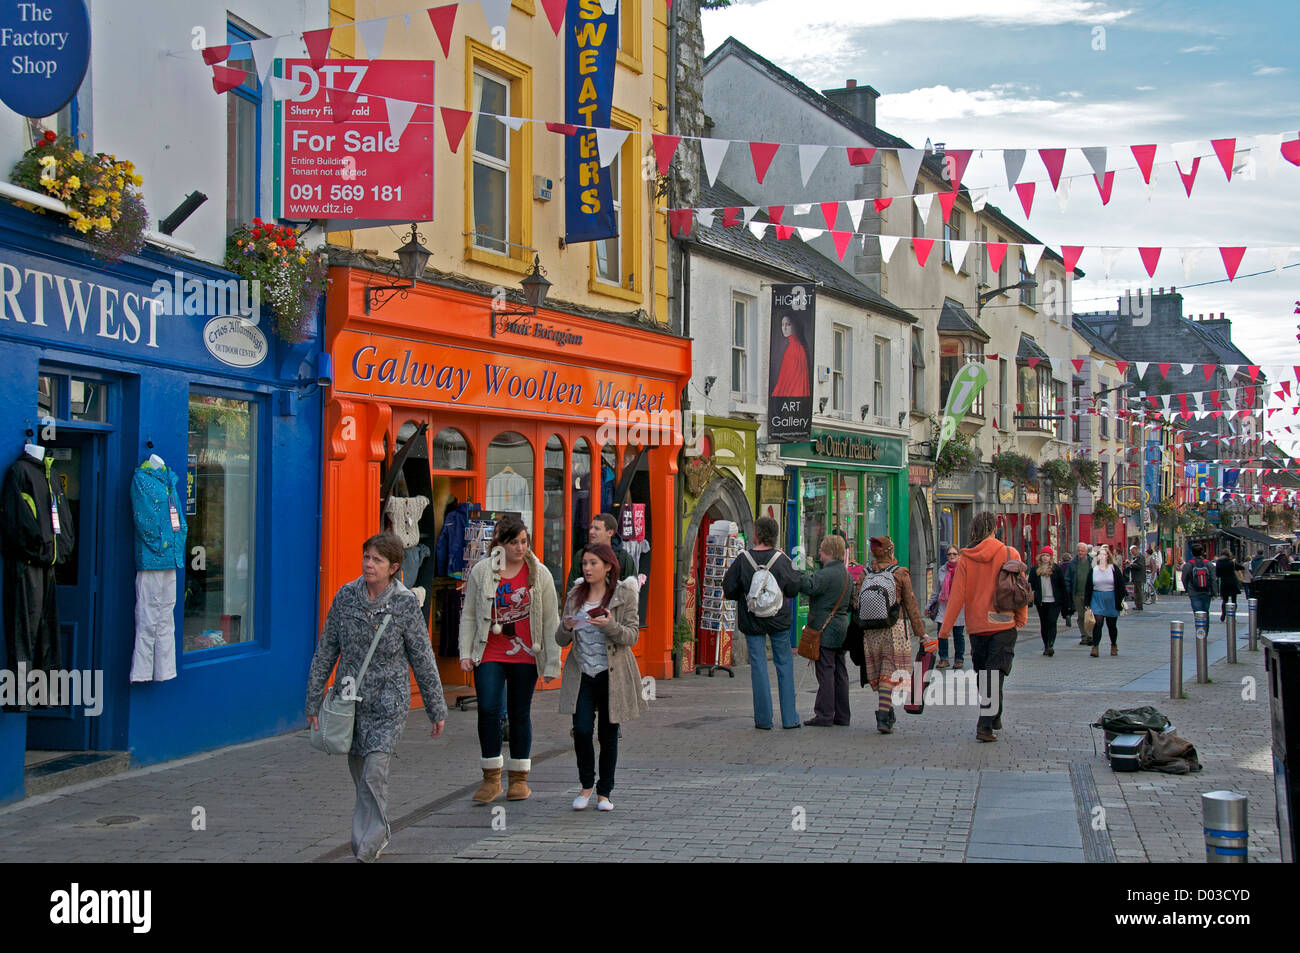 Pedestrianised street Galway County Galway Ireland Stock Photo